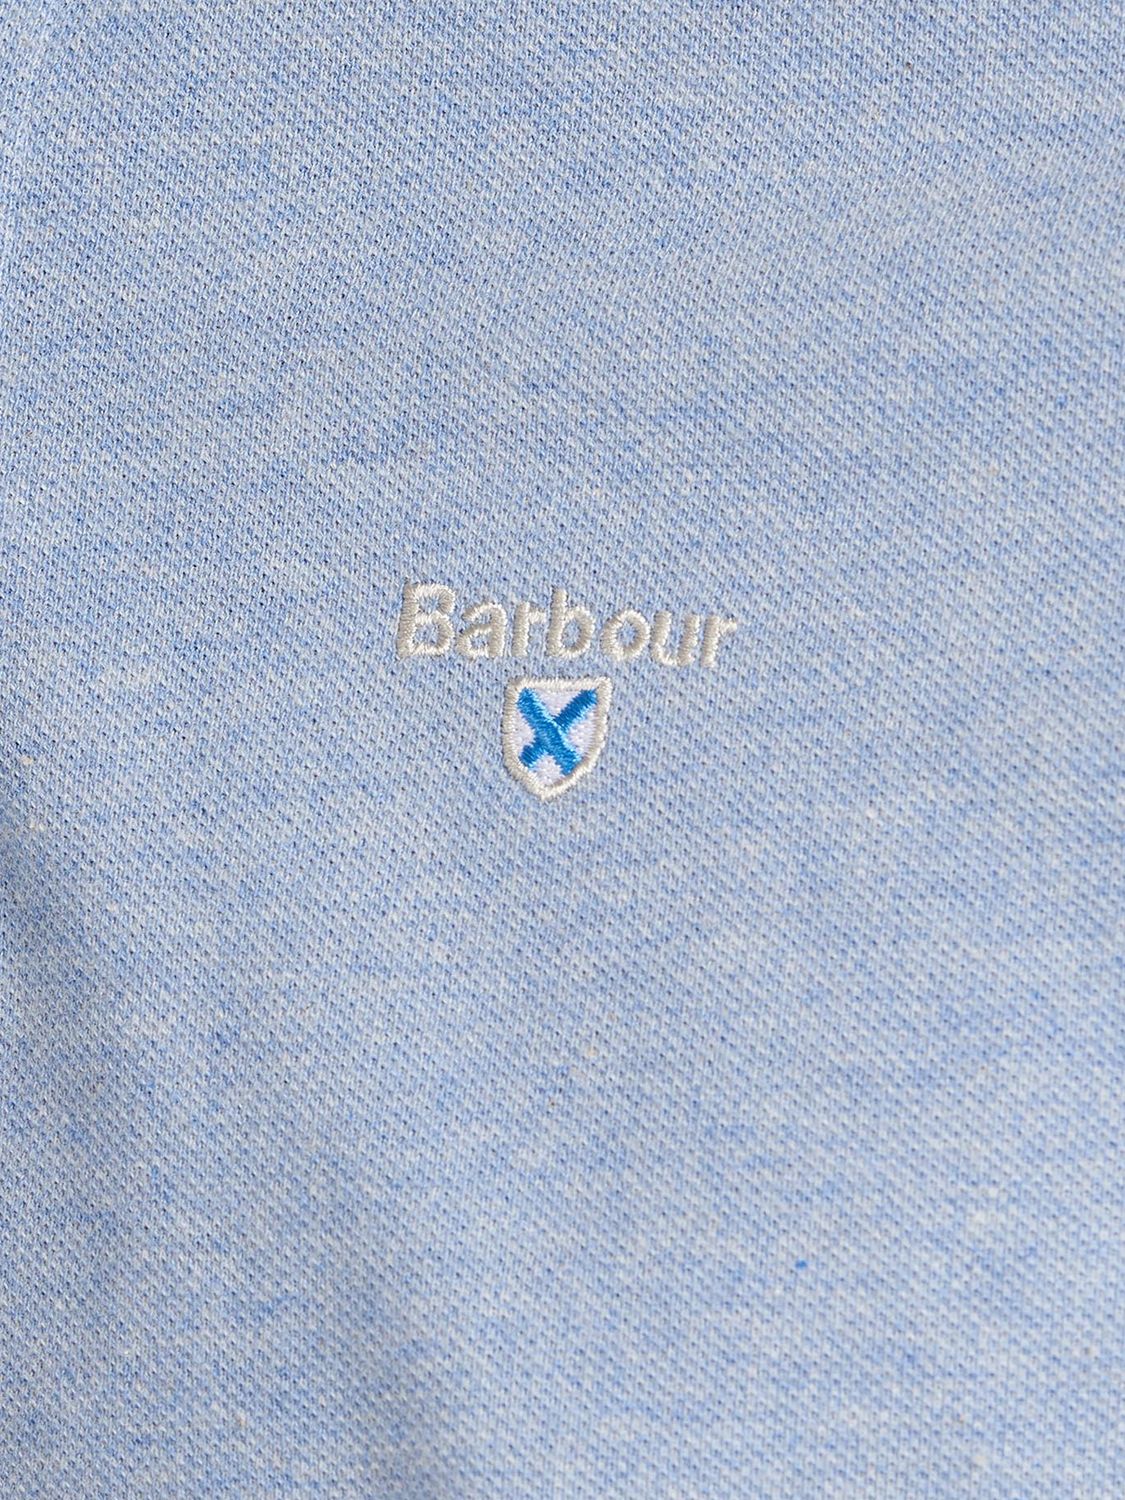 Barbour Tartan Pique Polo Shirt, Sky Marl/Dress, S